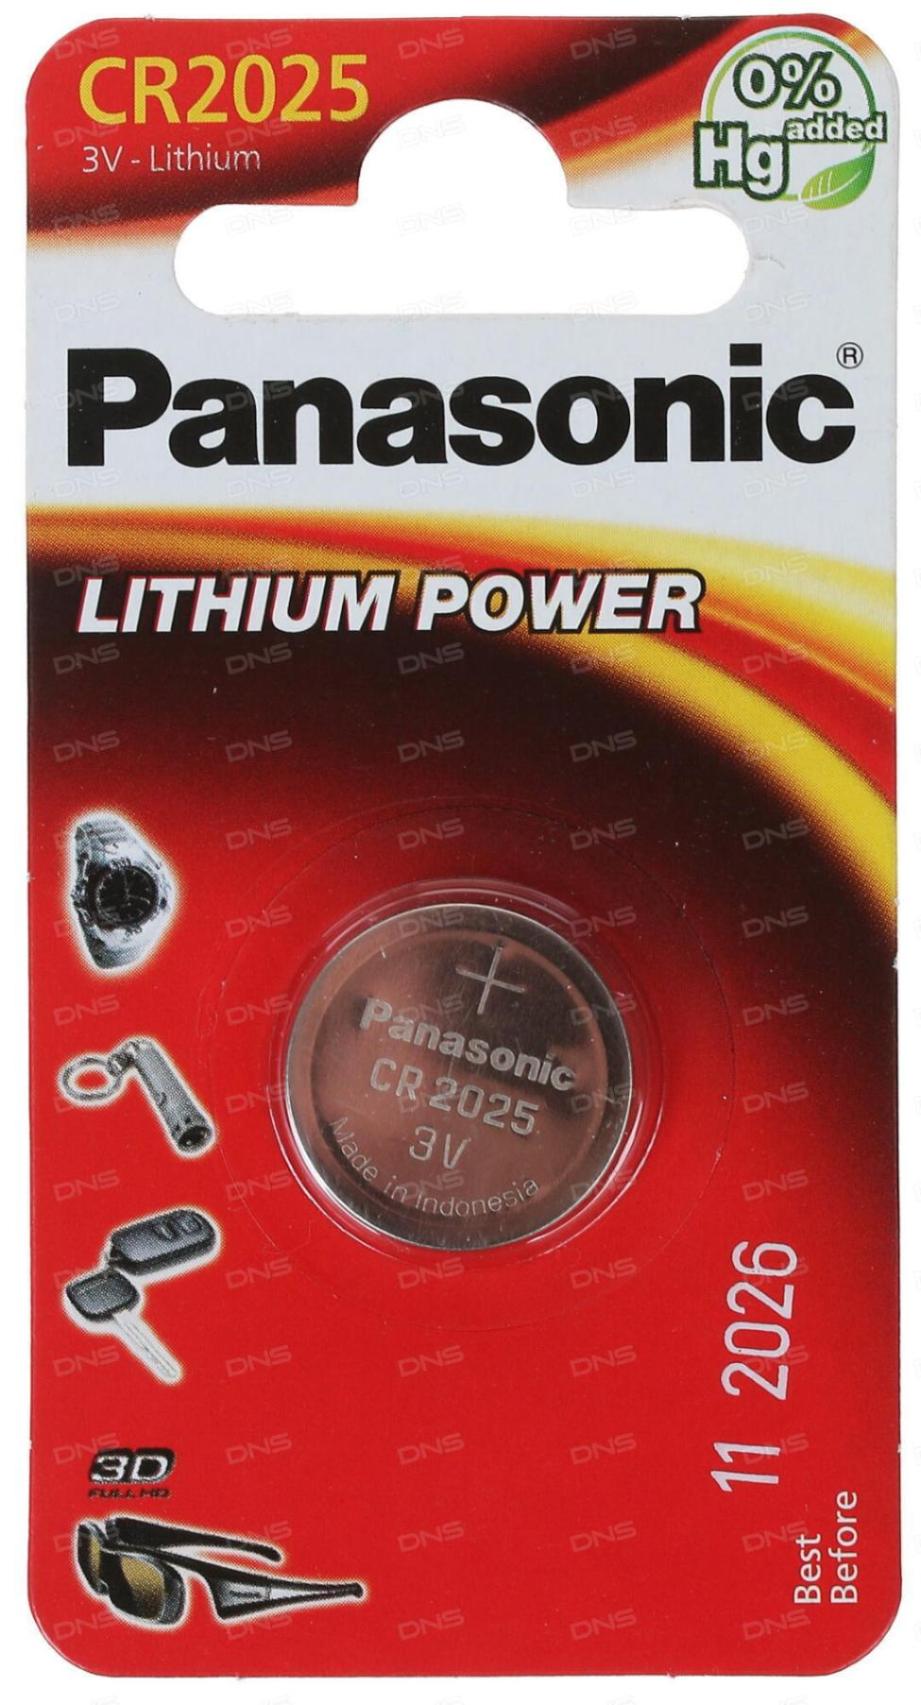 Panasonic Lithium Power CR2025 дисковые батарейки